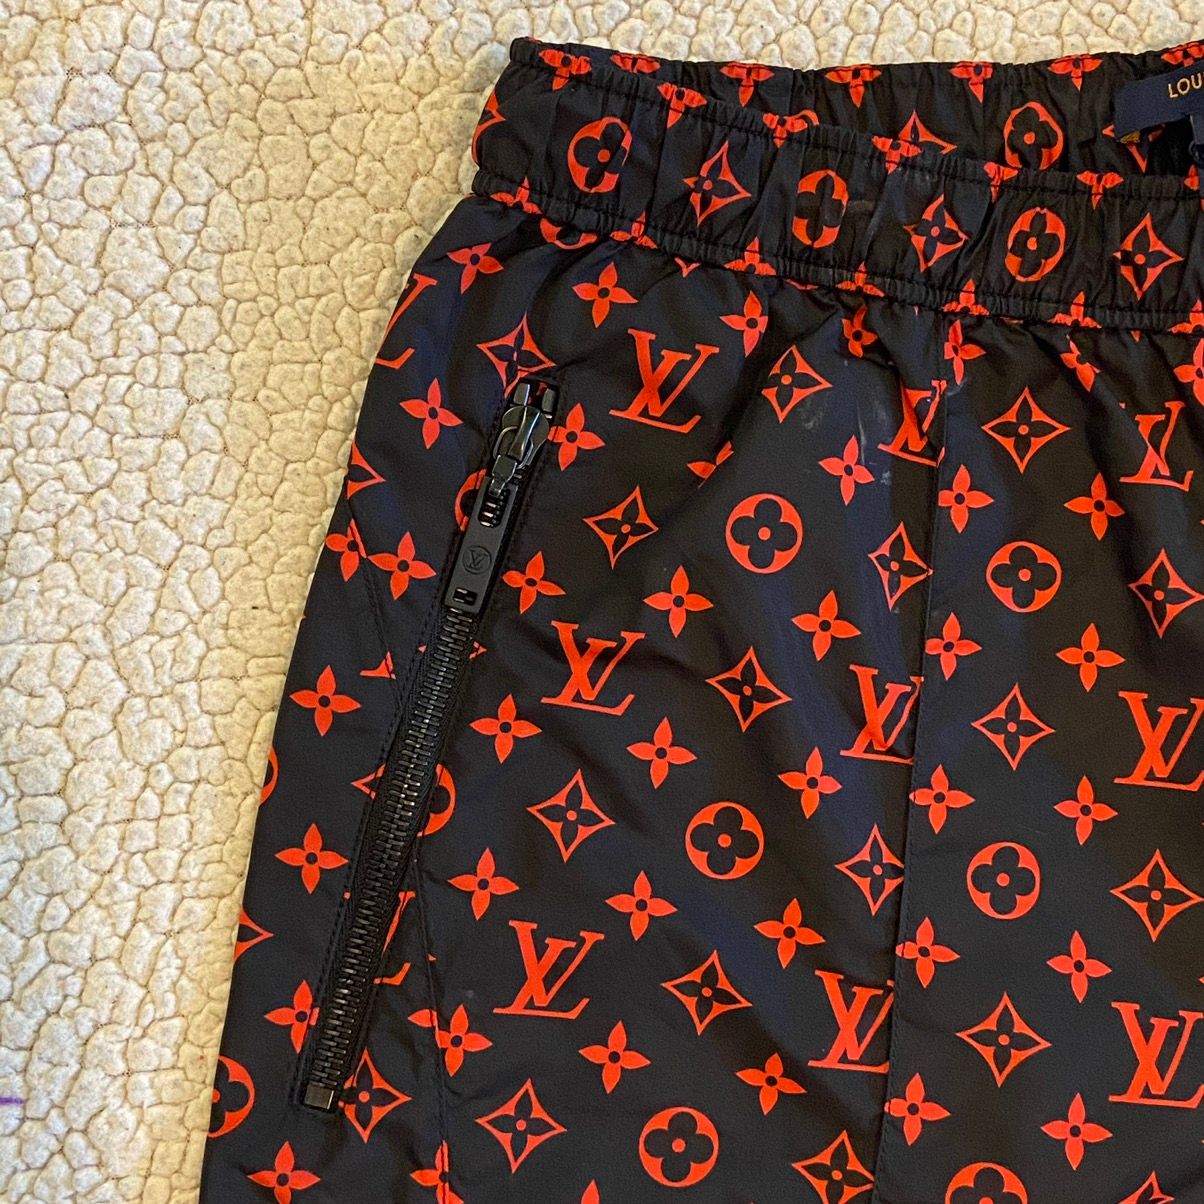 Louis Vuitton Red Monogram Jogging Pants In Technical Cotton